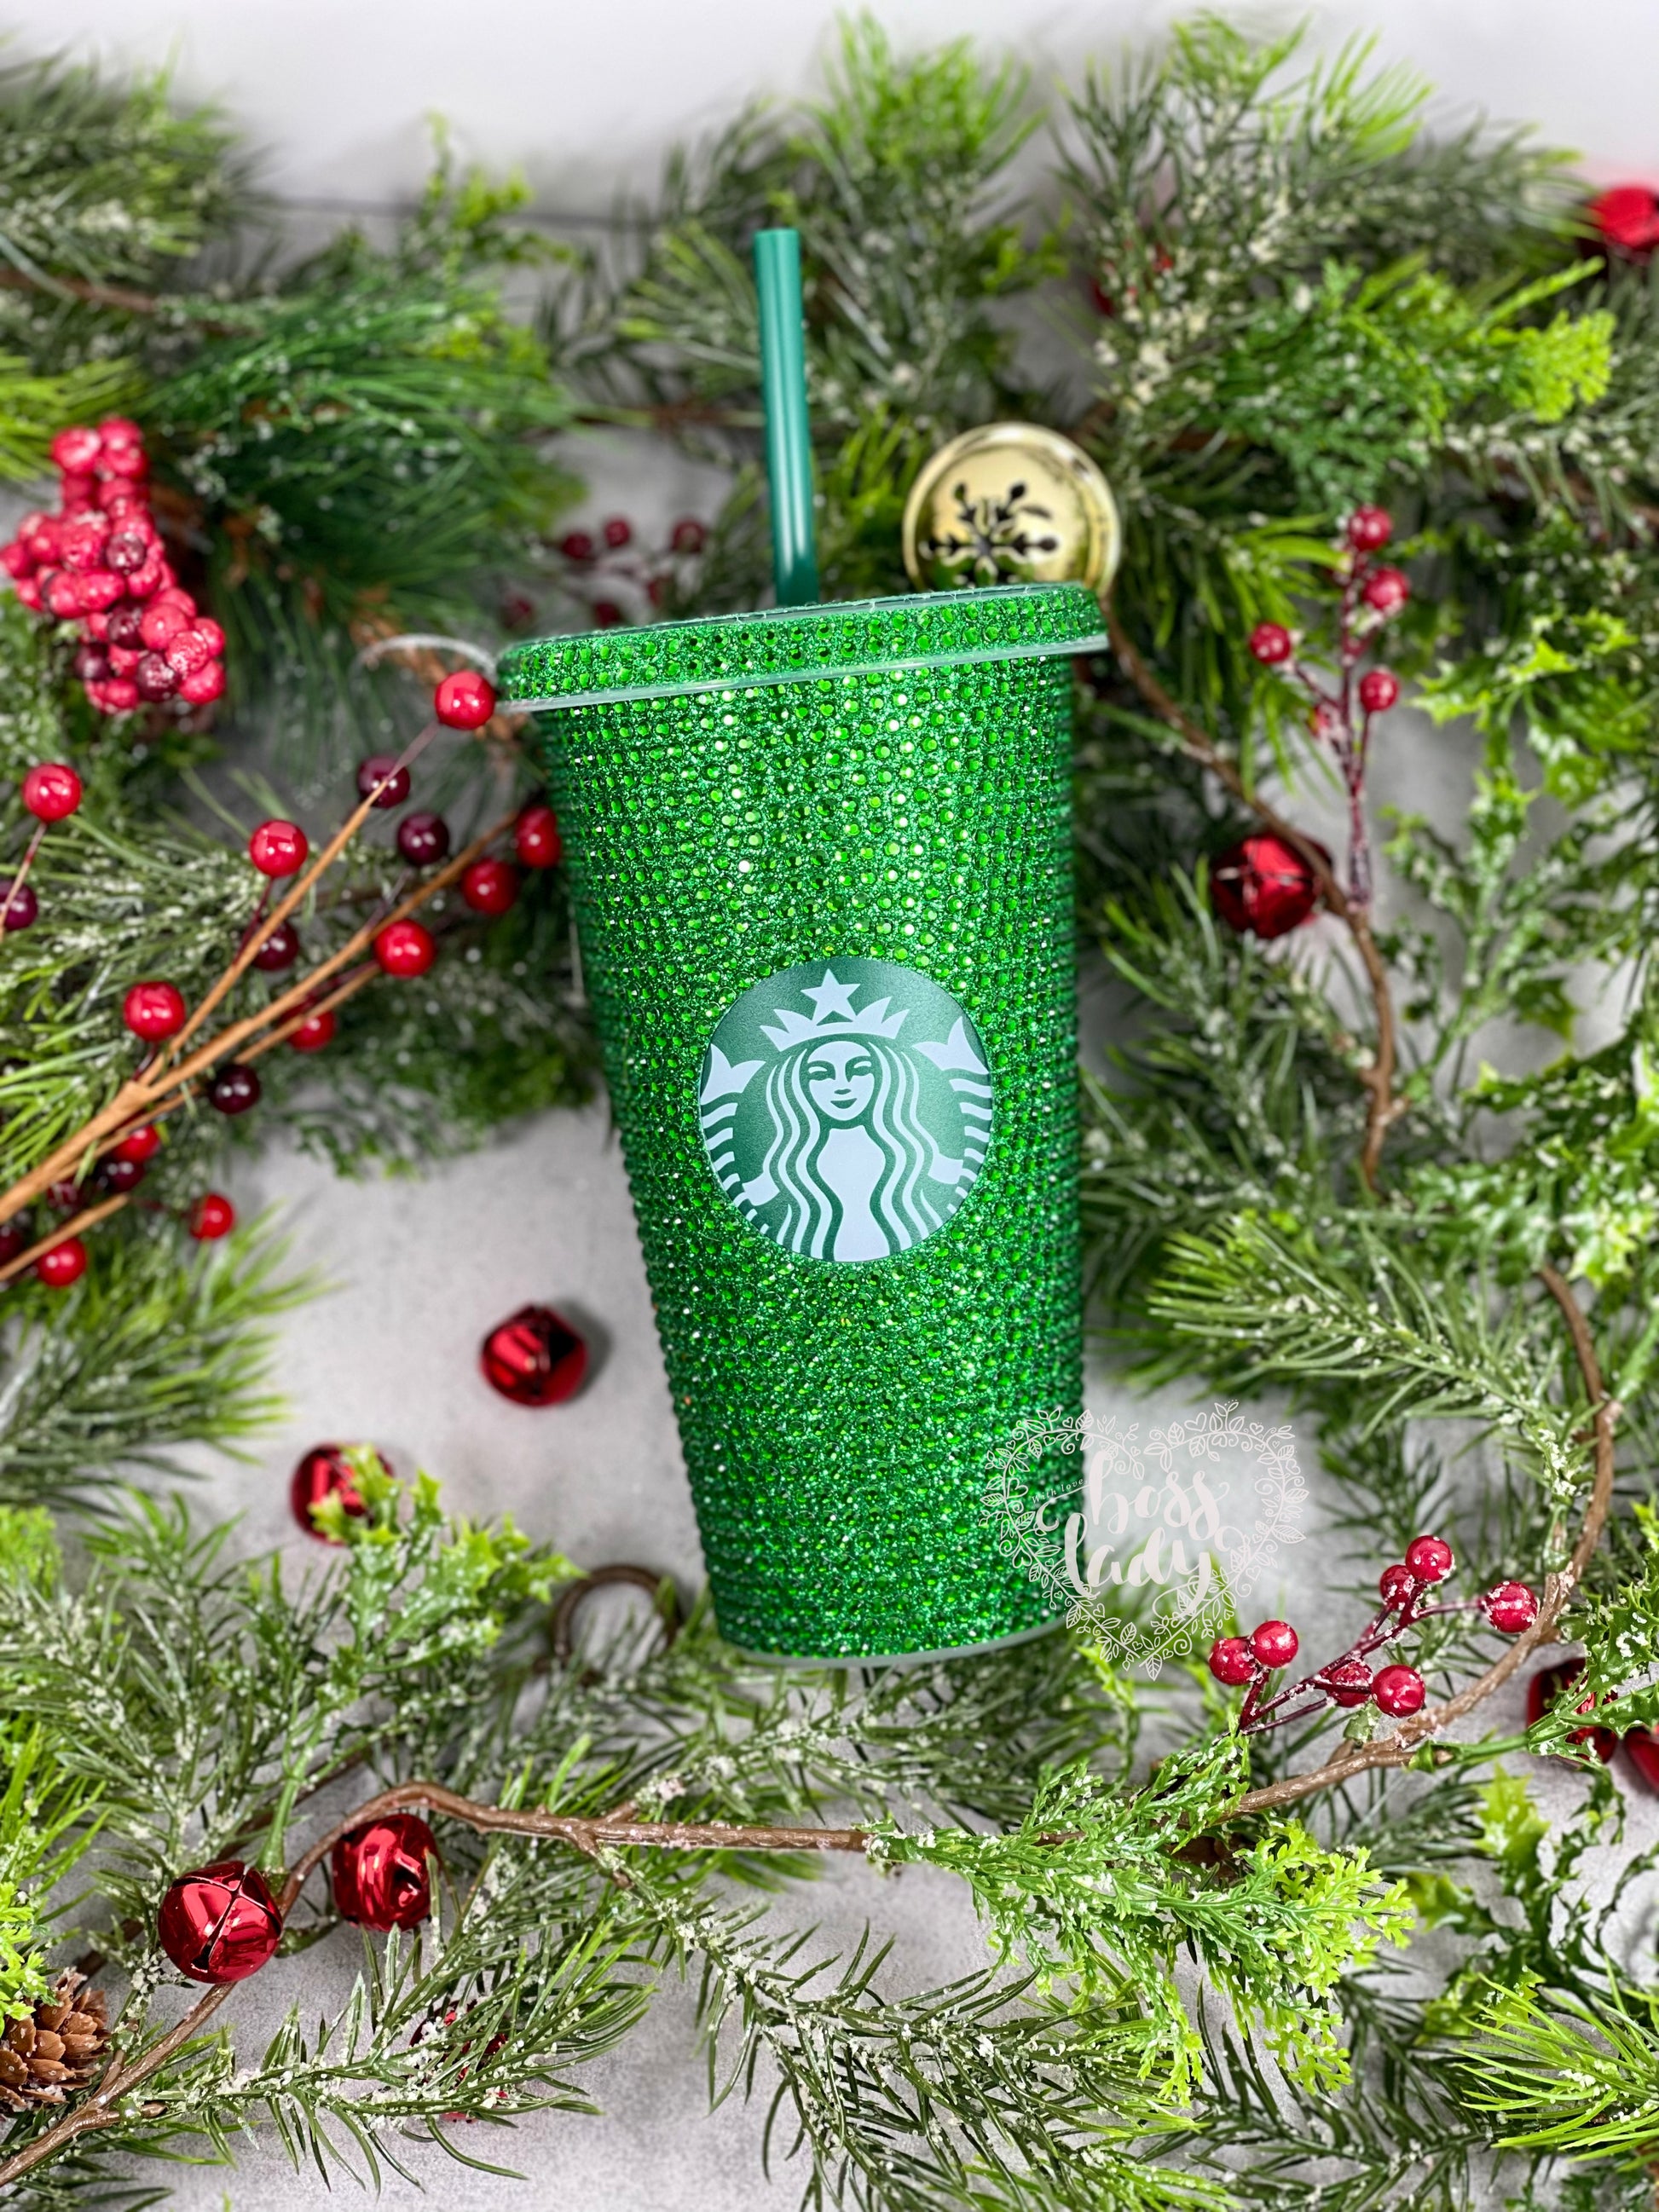 Starbucks Tumbler, Starbucks Christmas Cup, Starbucks Cup